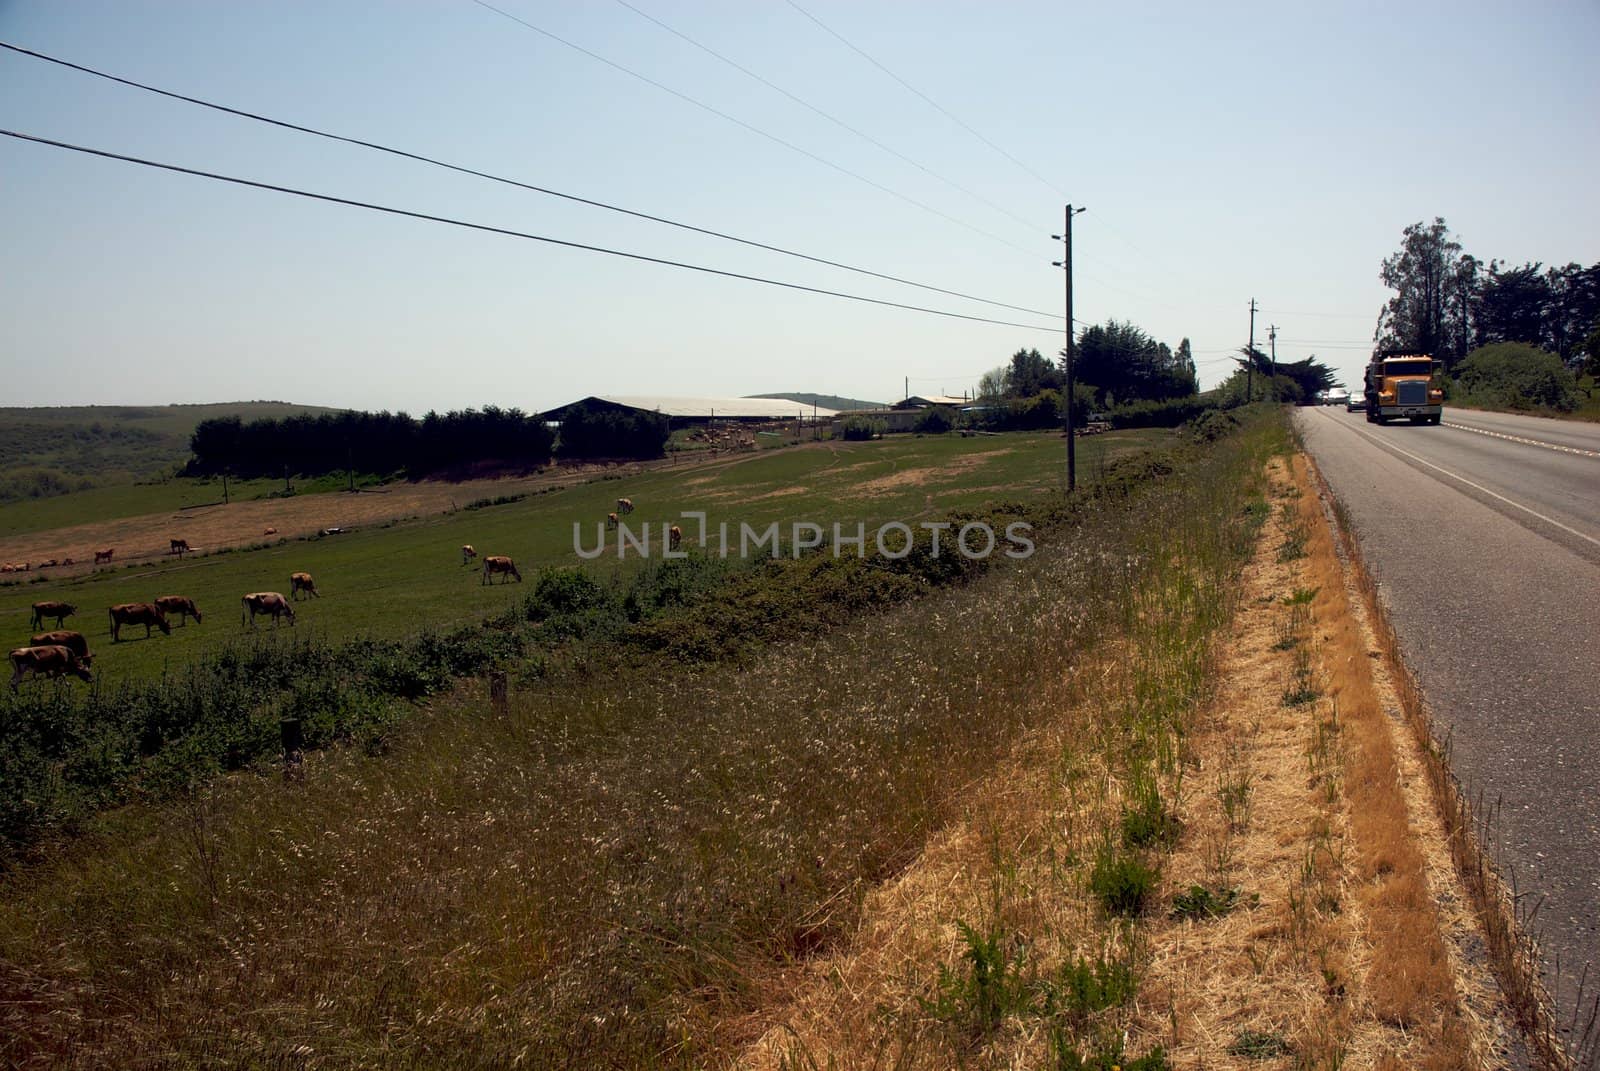 California Farm Country by jedphoto